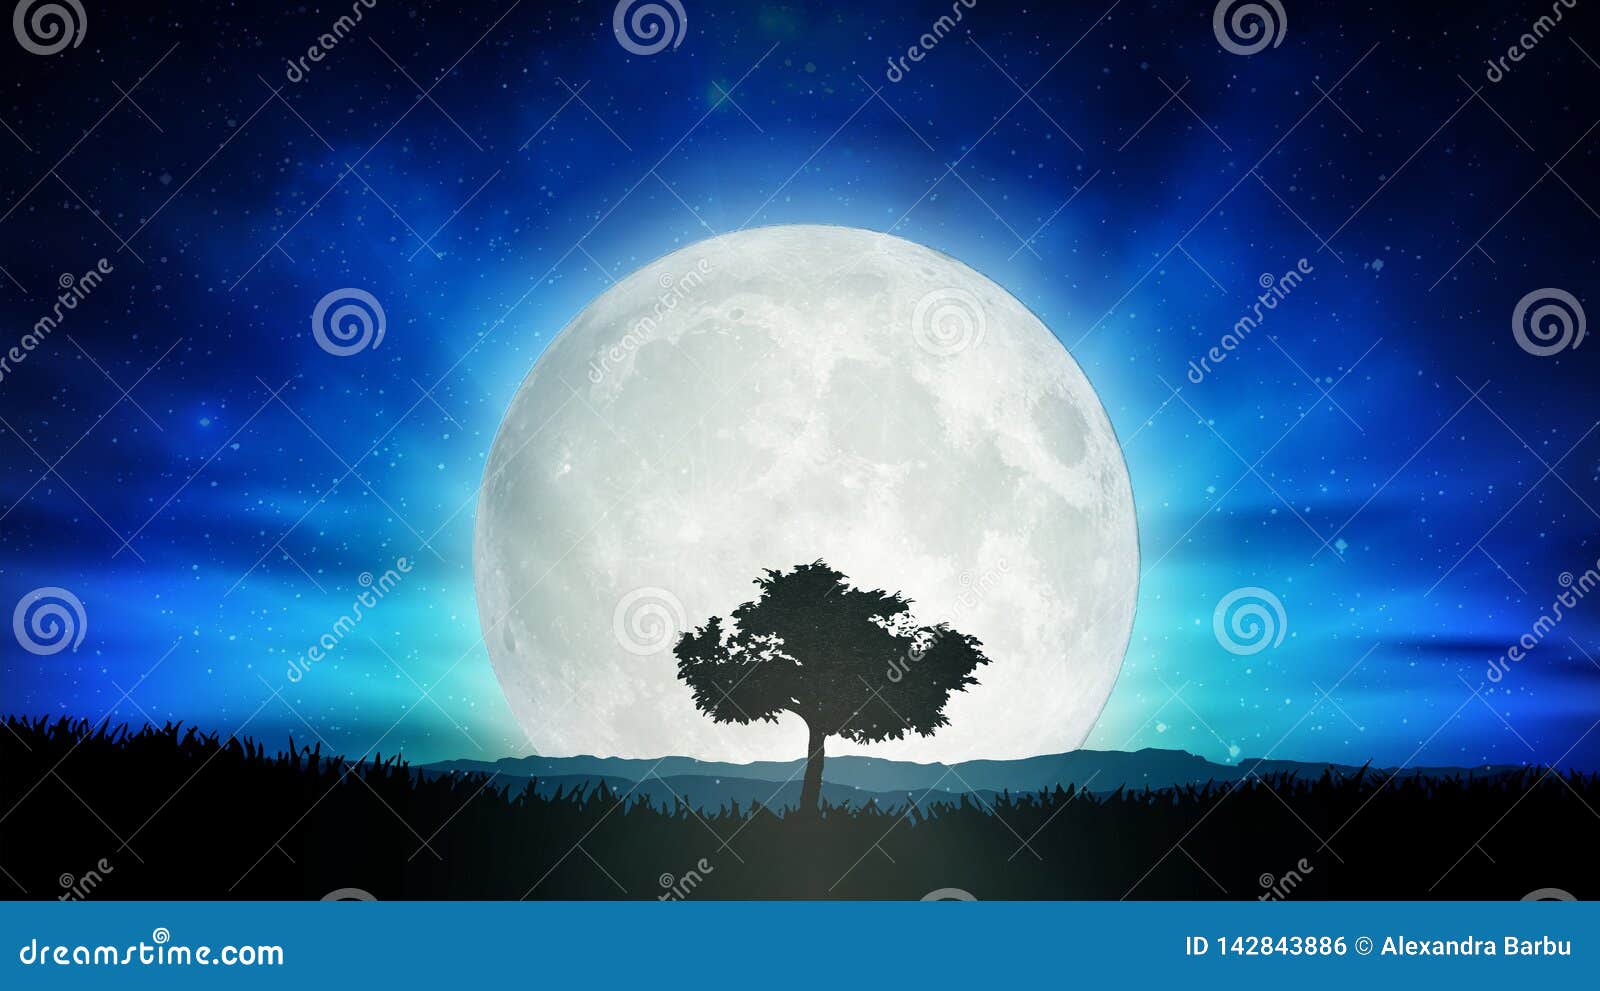 beautiful full moon, solitude tree silhouette nature landscape